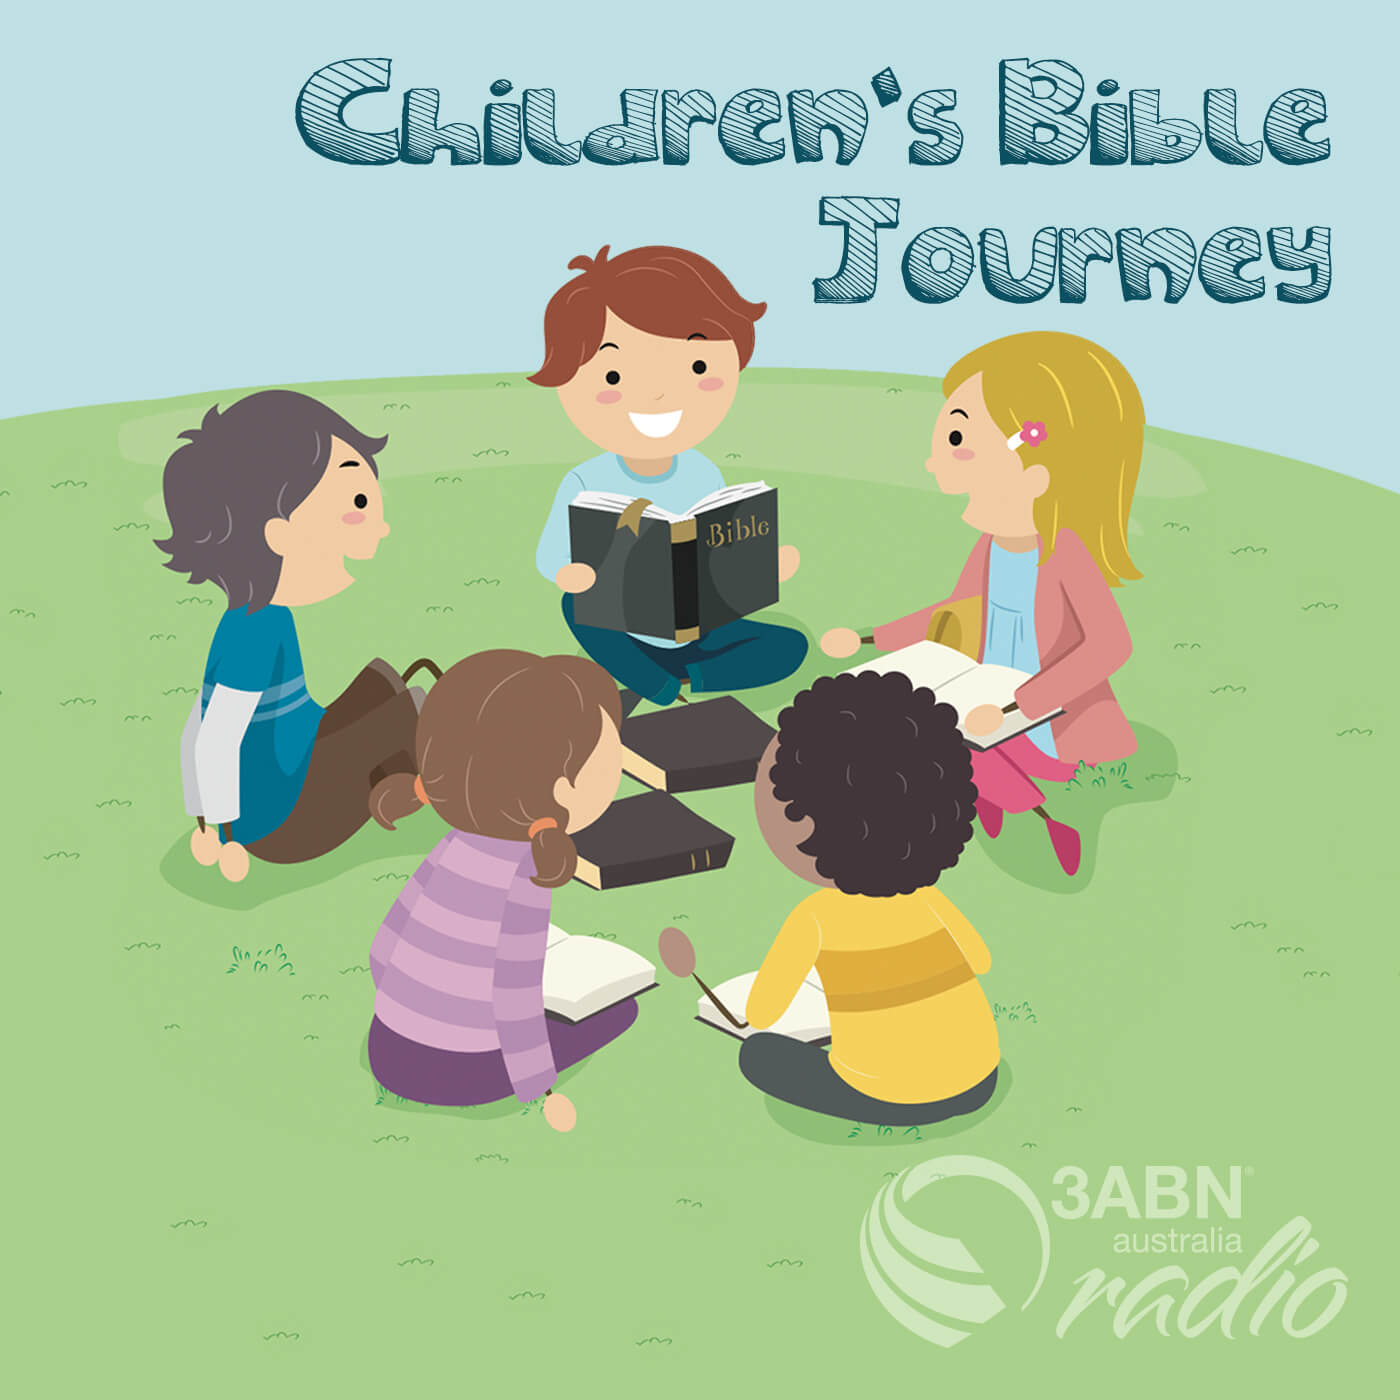 Children’s Bible Journey - 2209